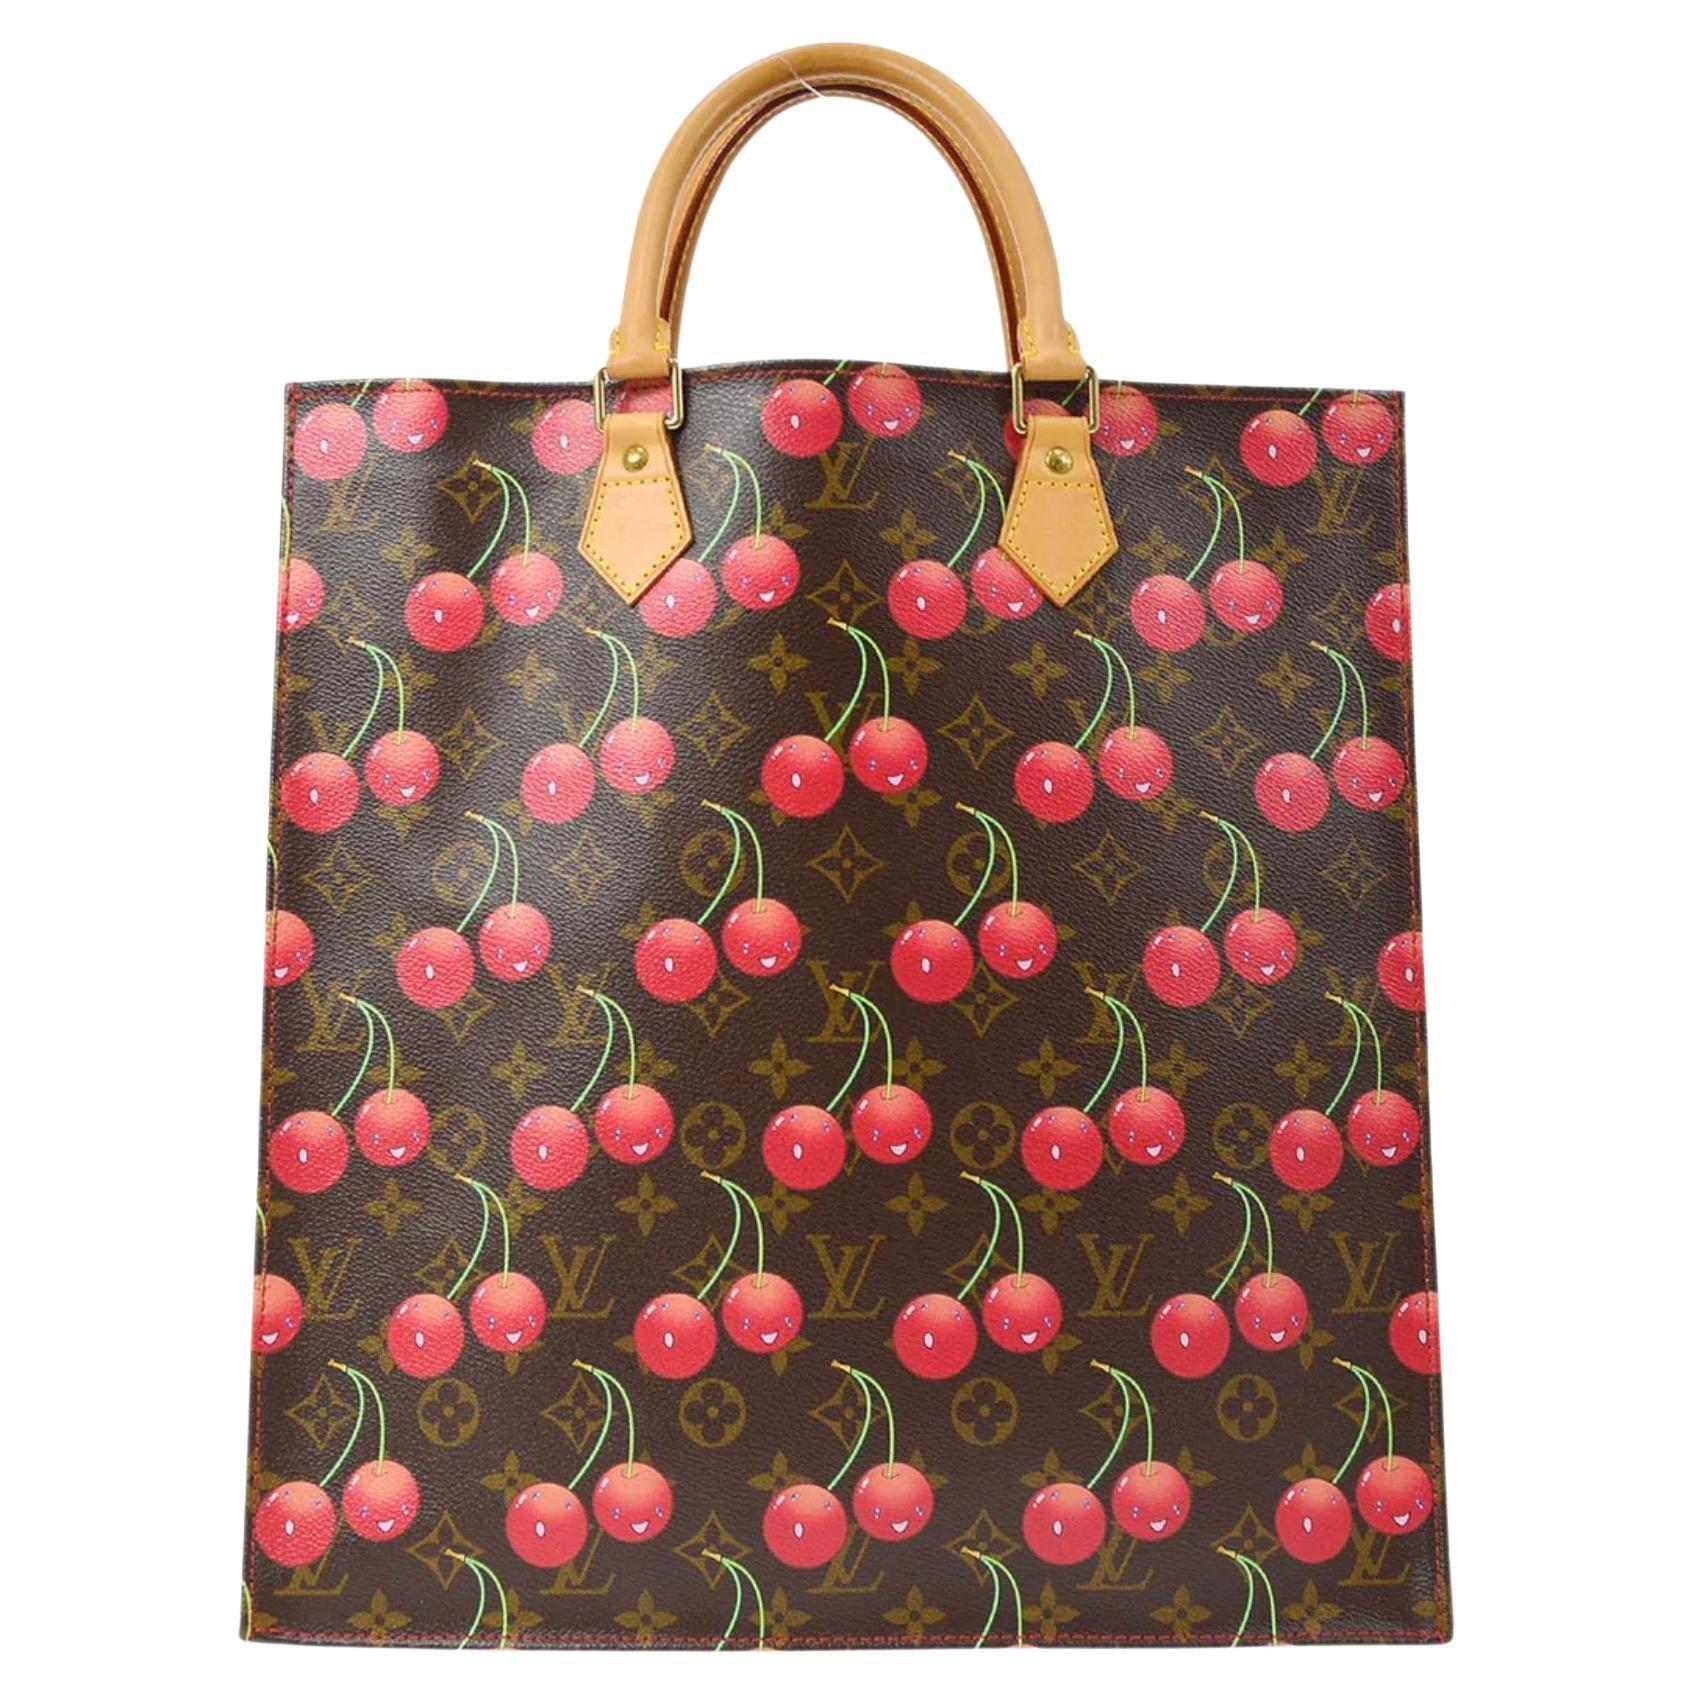 LOUIS VUITTON Monogram Canvas Cherry Shopper Carryall Travel Tote Bag For Sale